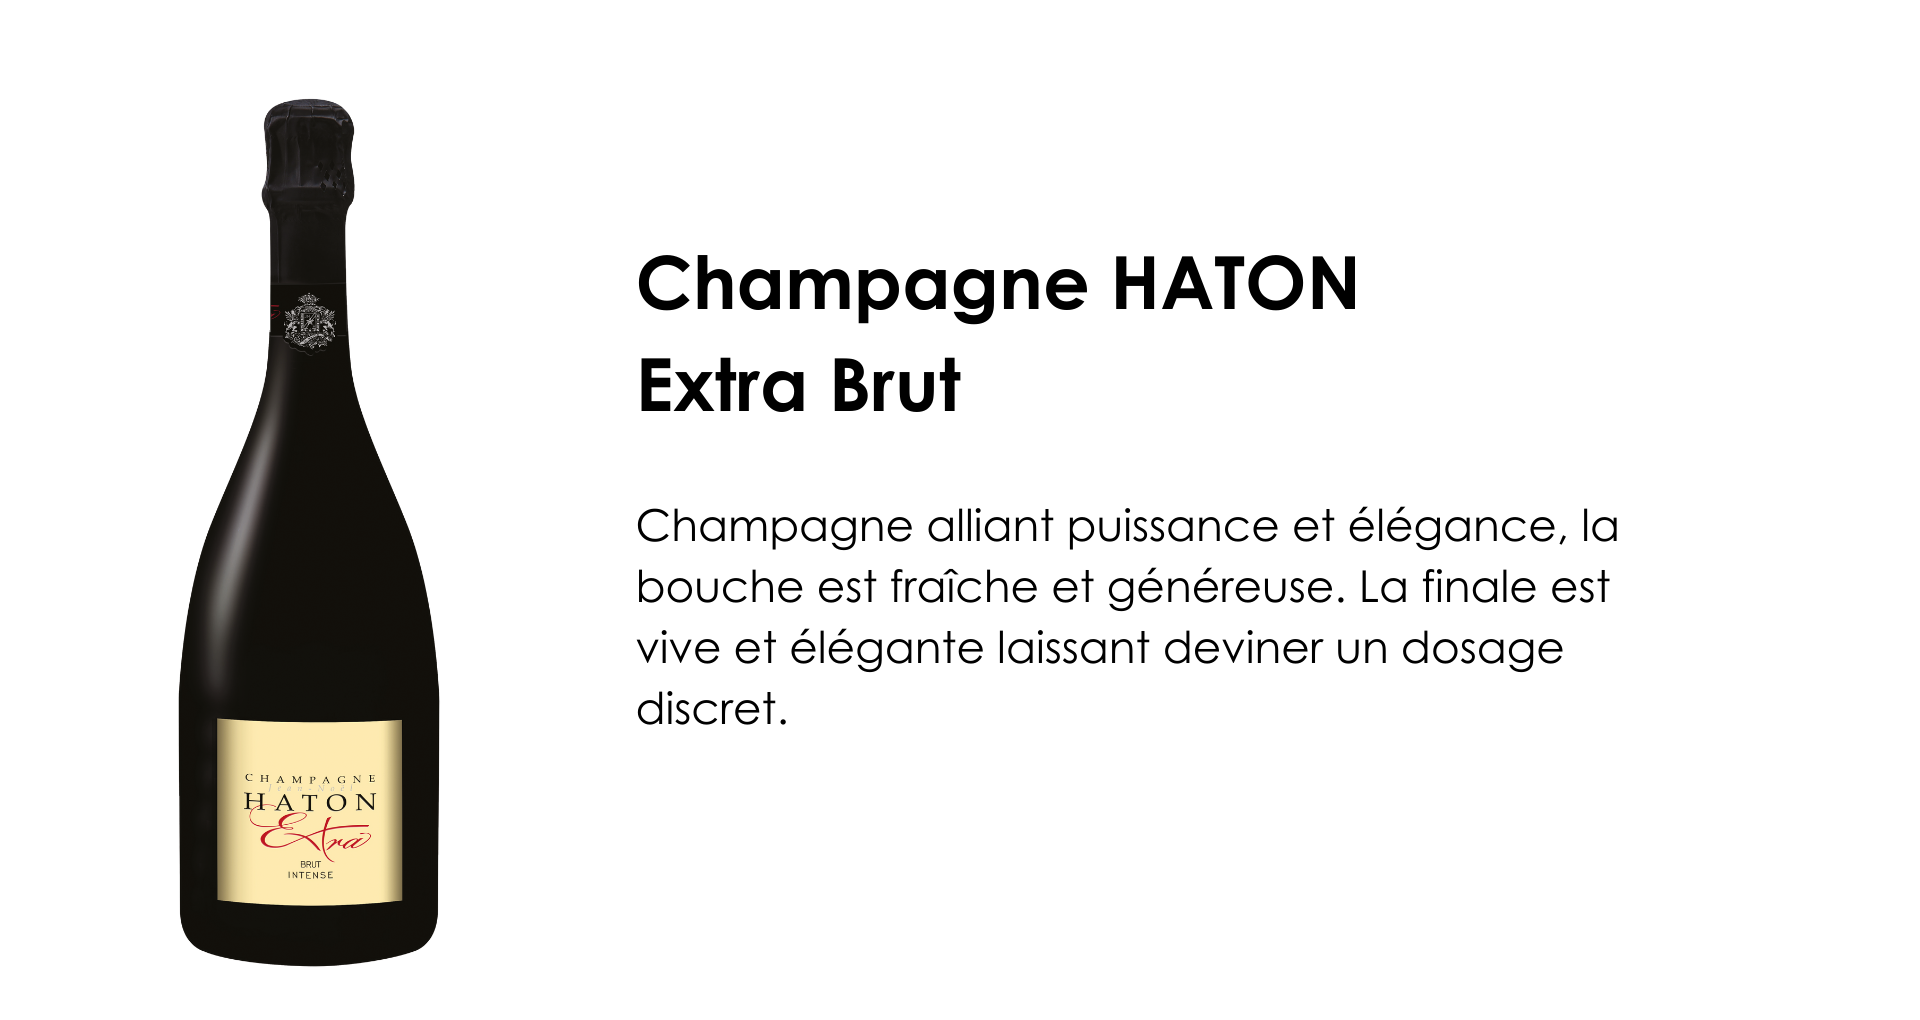 Champagne Haton brut extra